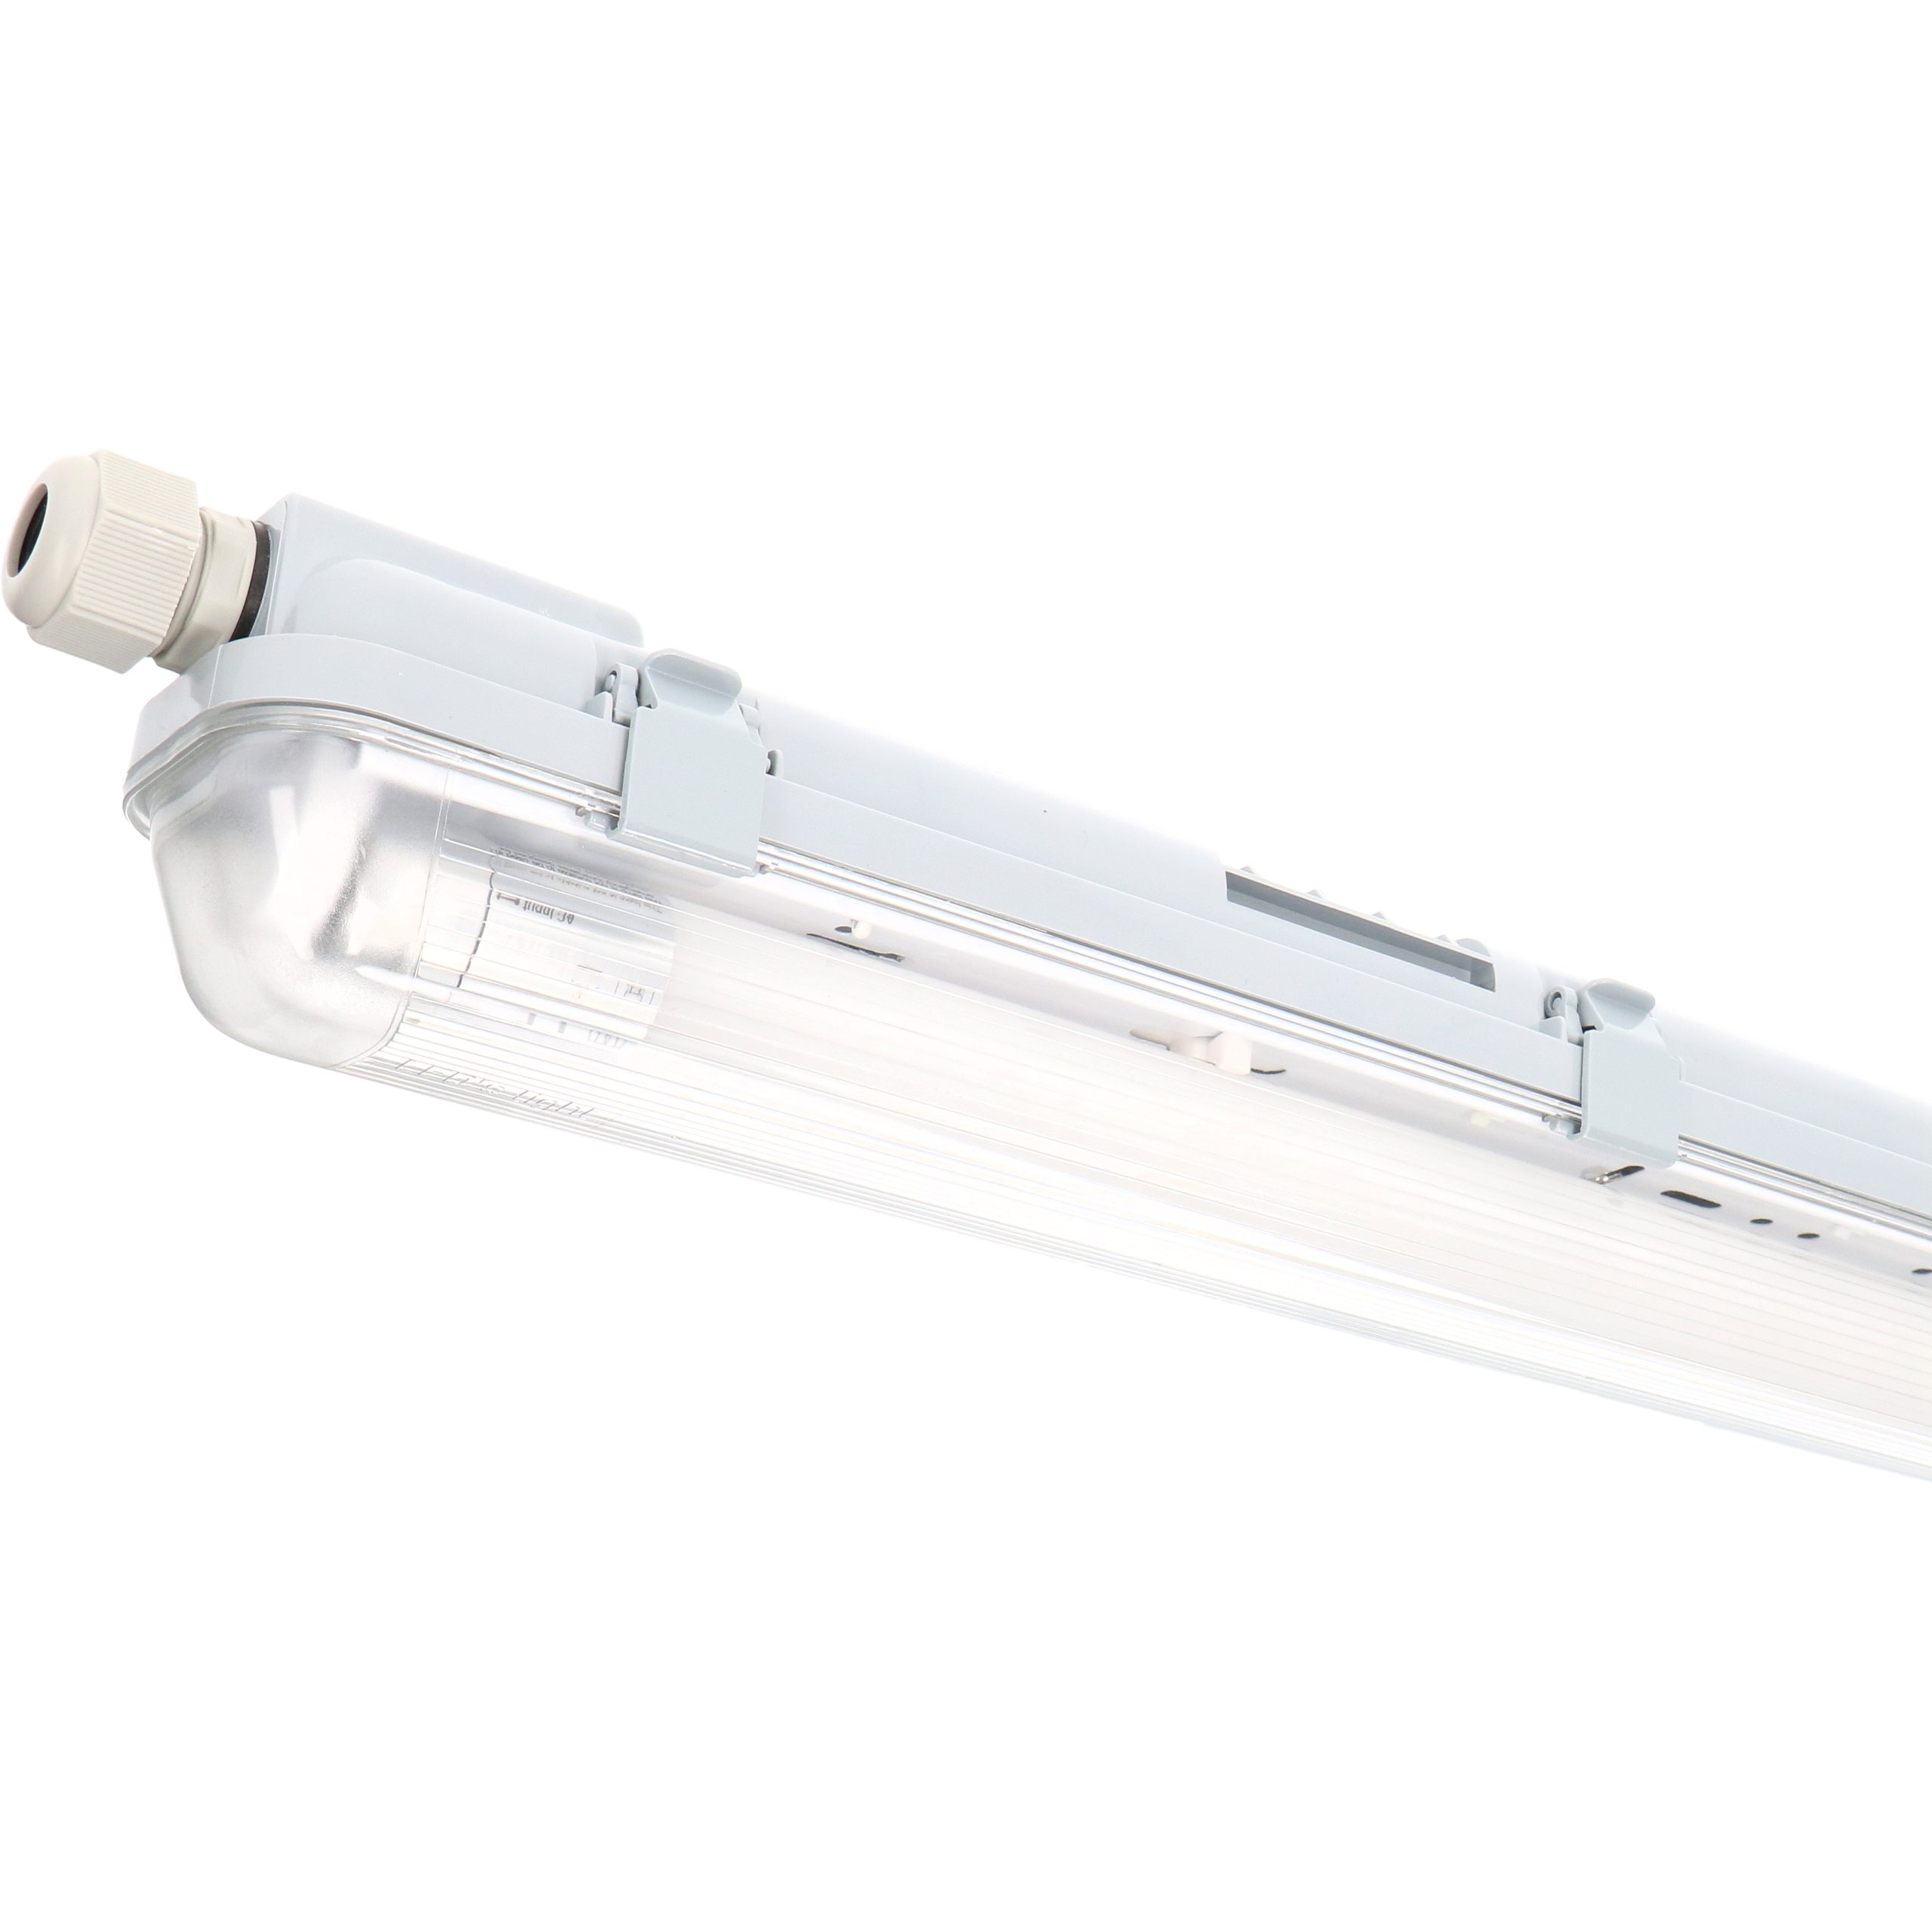 LED's light LED Deckenleuchte 2411202 Feuchtraumleuchte, LED, mit LED-Röhre 120 cm 14W neutralweiß IP65 G13